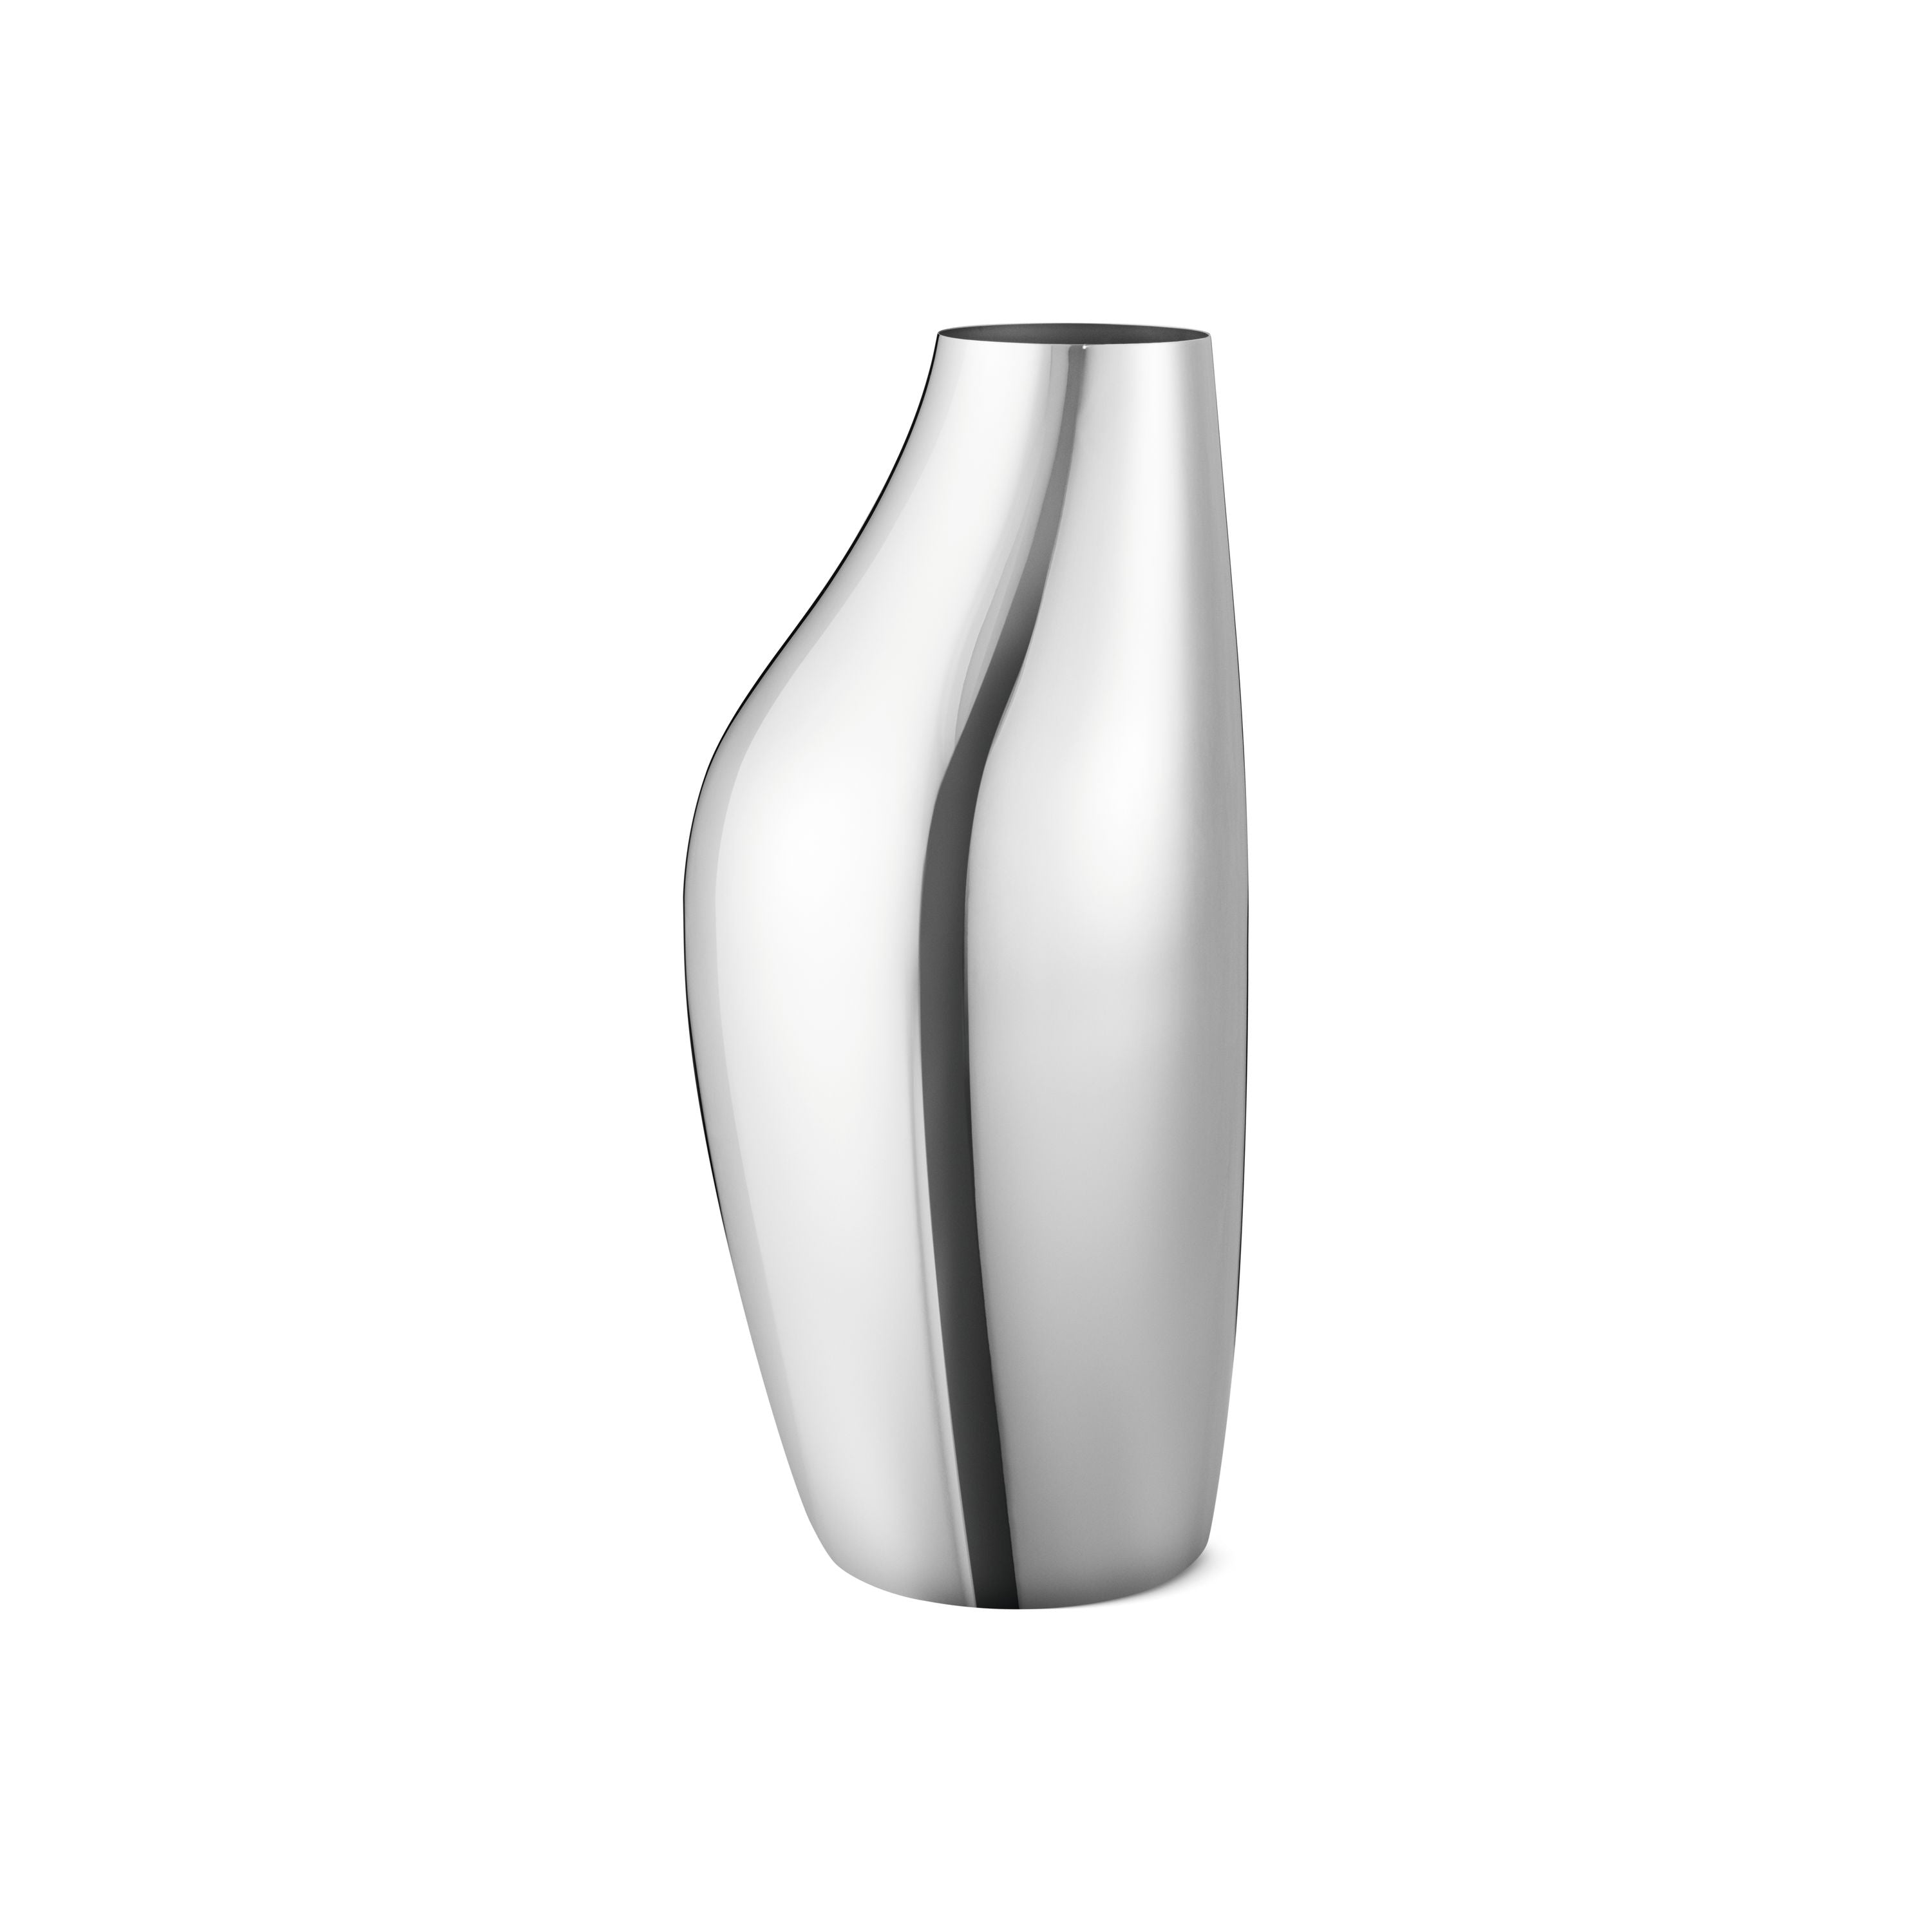 Georg Jensen Sky Floor Vase, Stainless Steel, Mirror